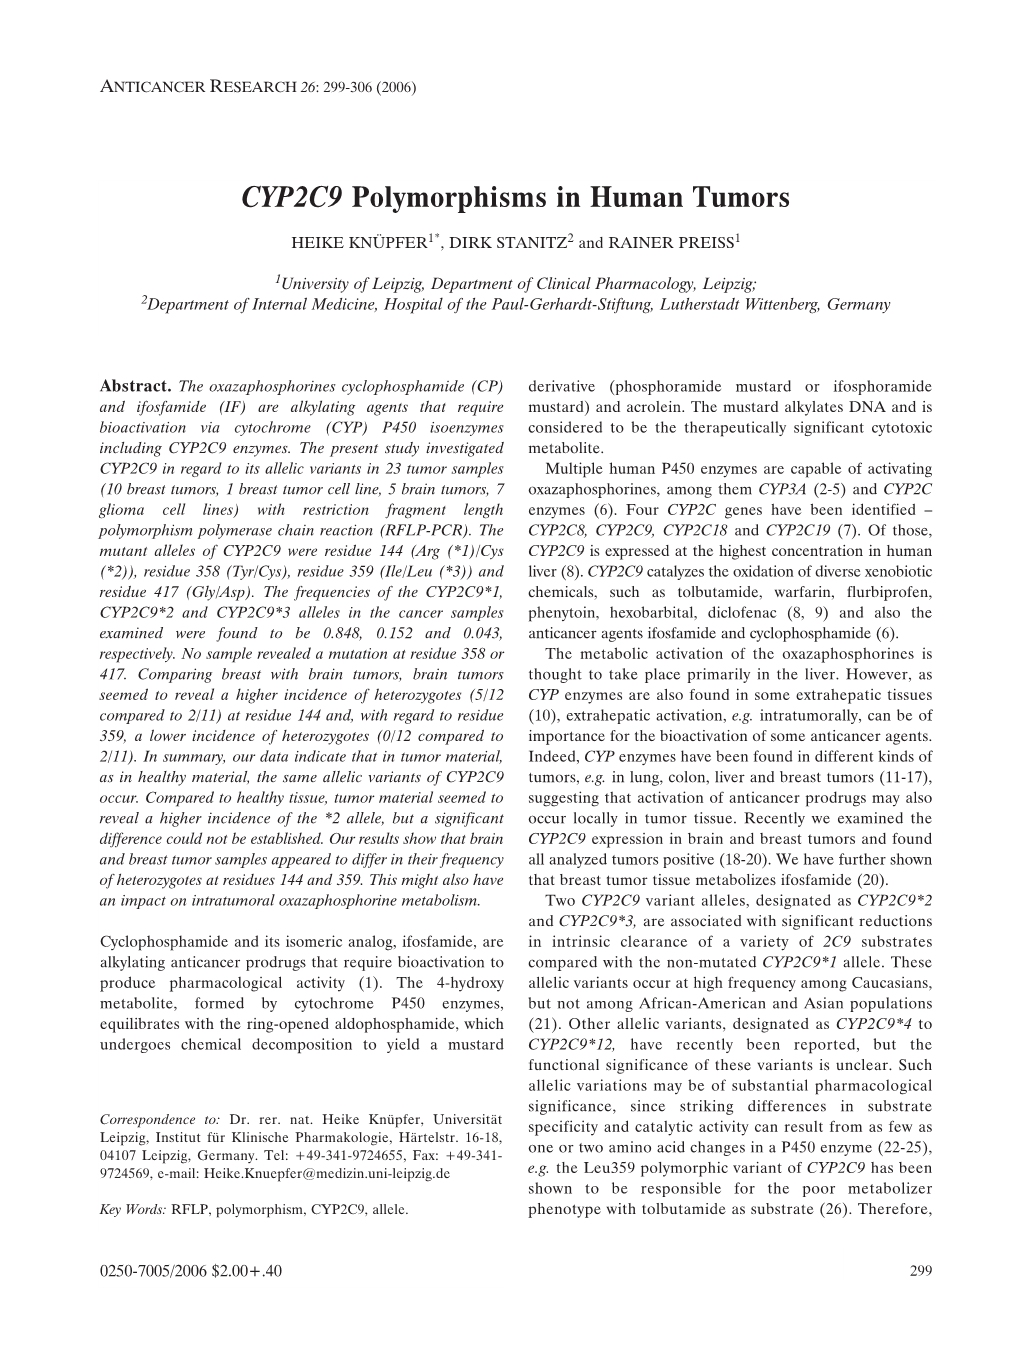 CYP2C9 Polymorphisms in Human Tumors